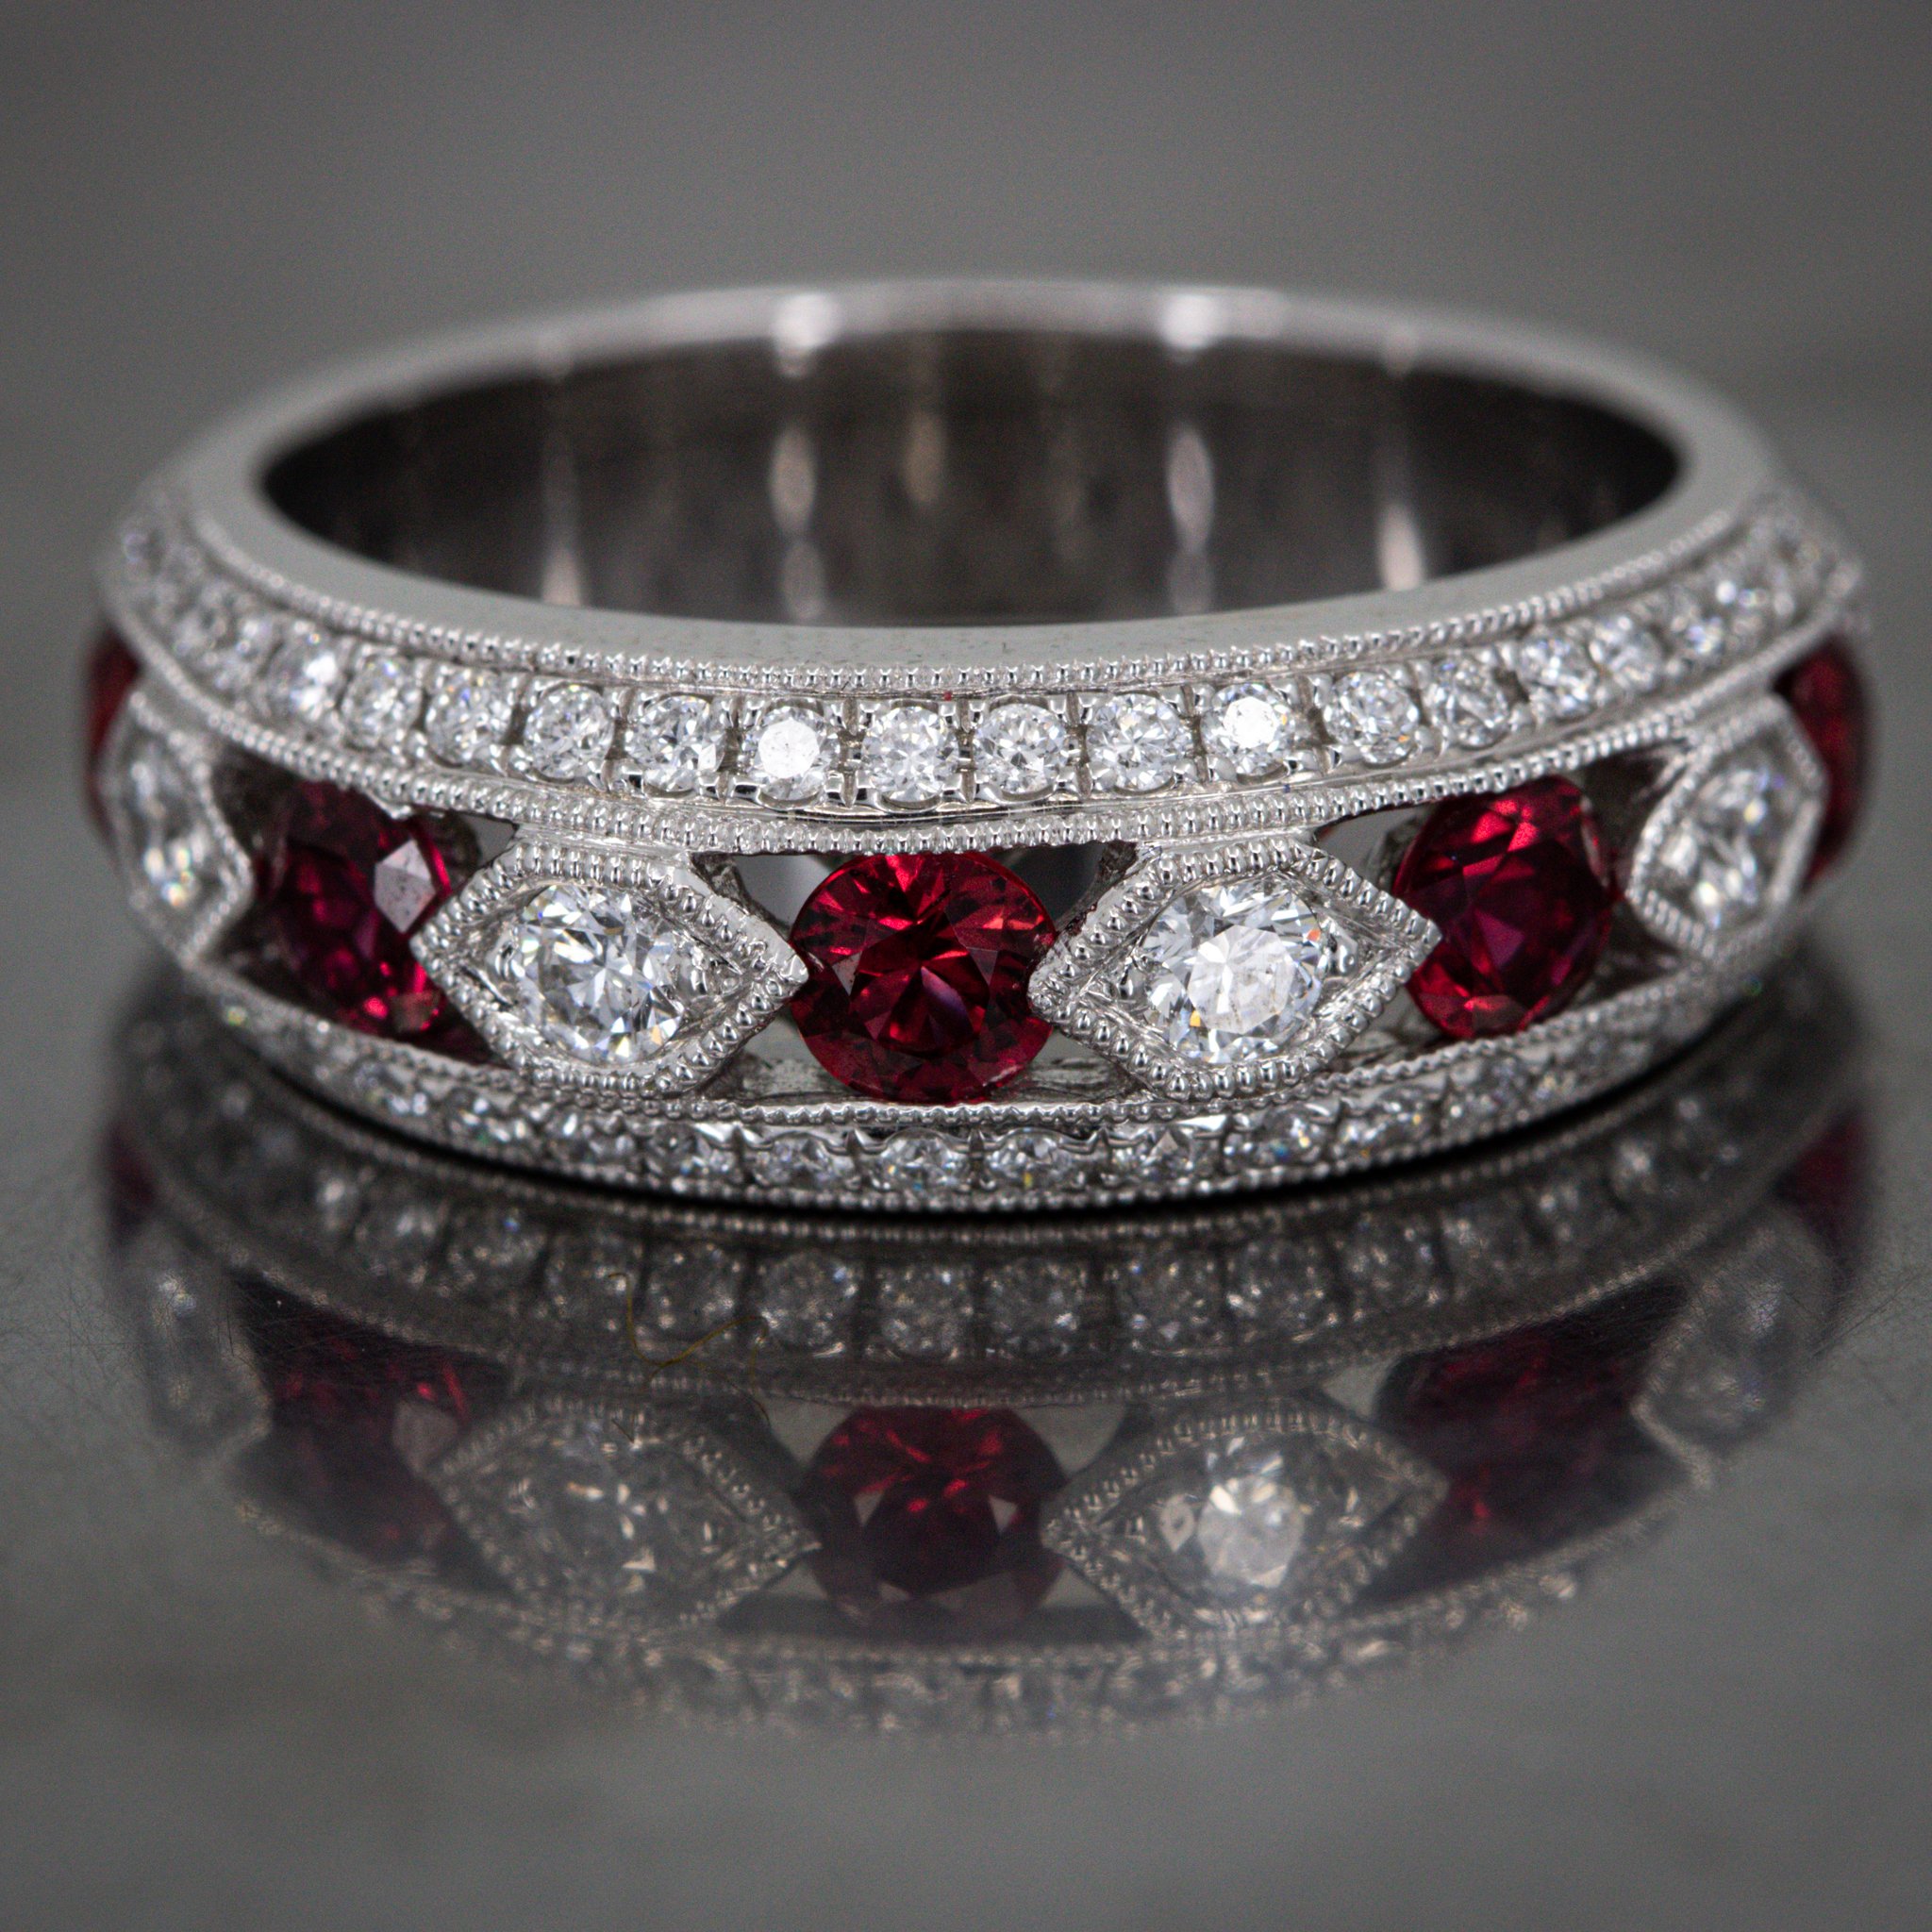 Shop — Rings True Custom Jewelry